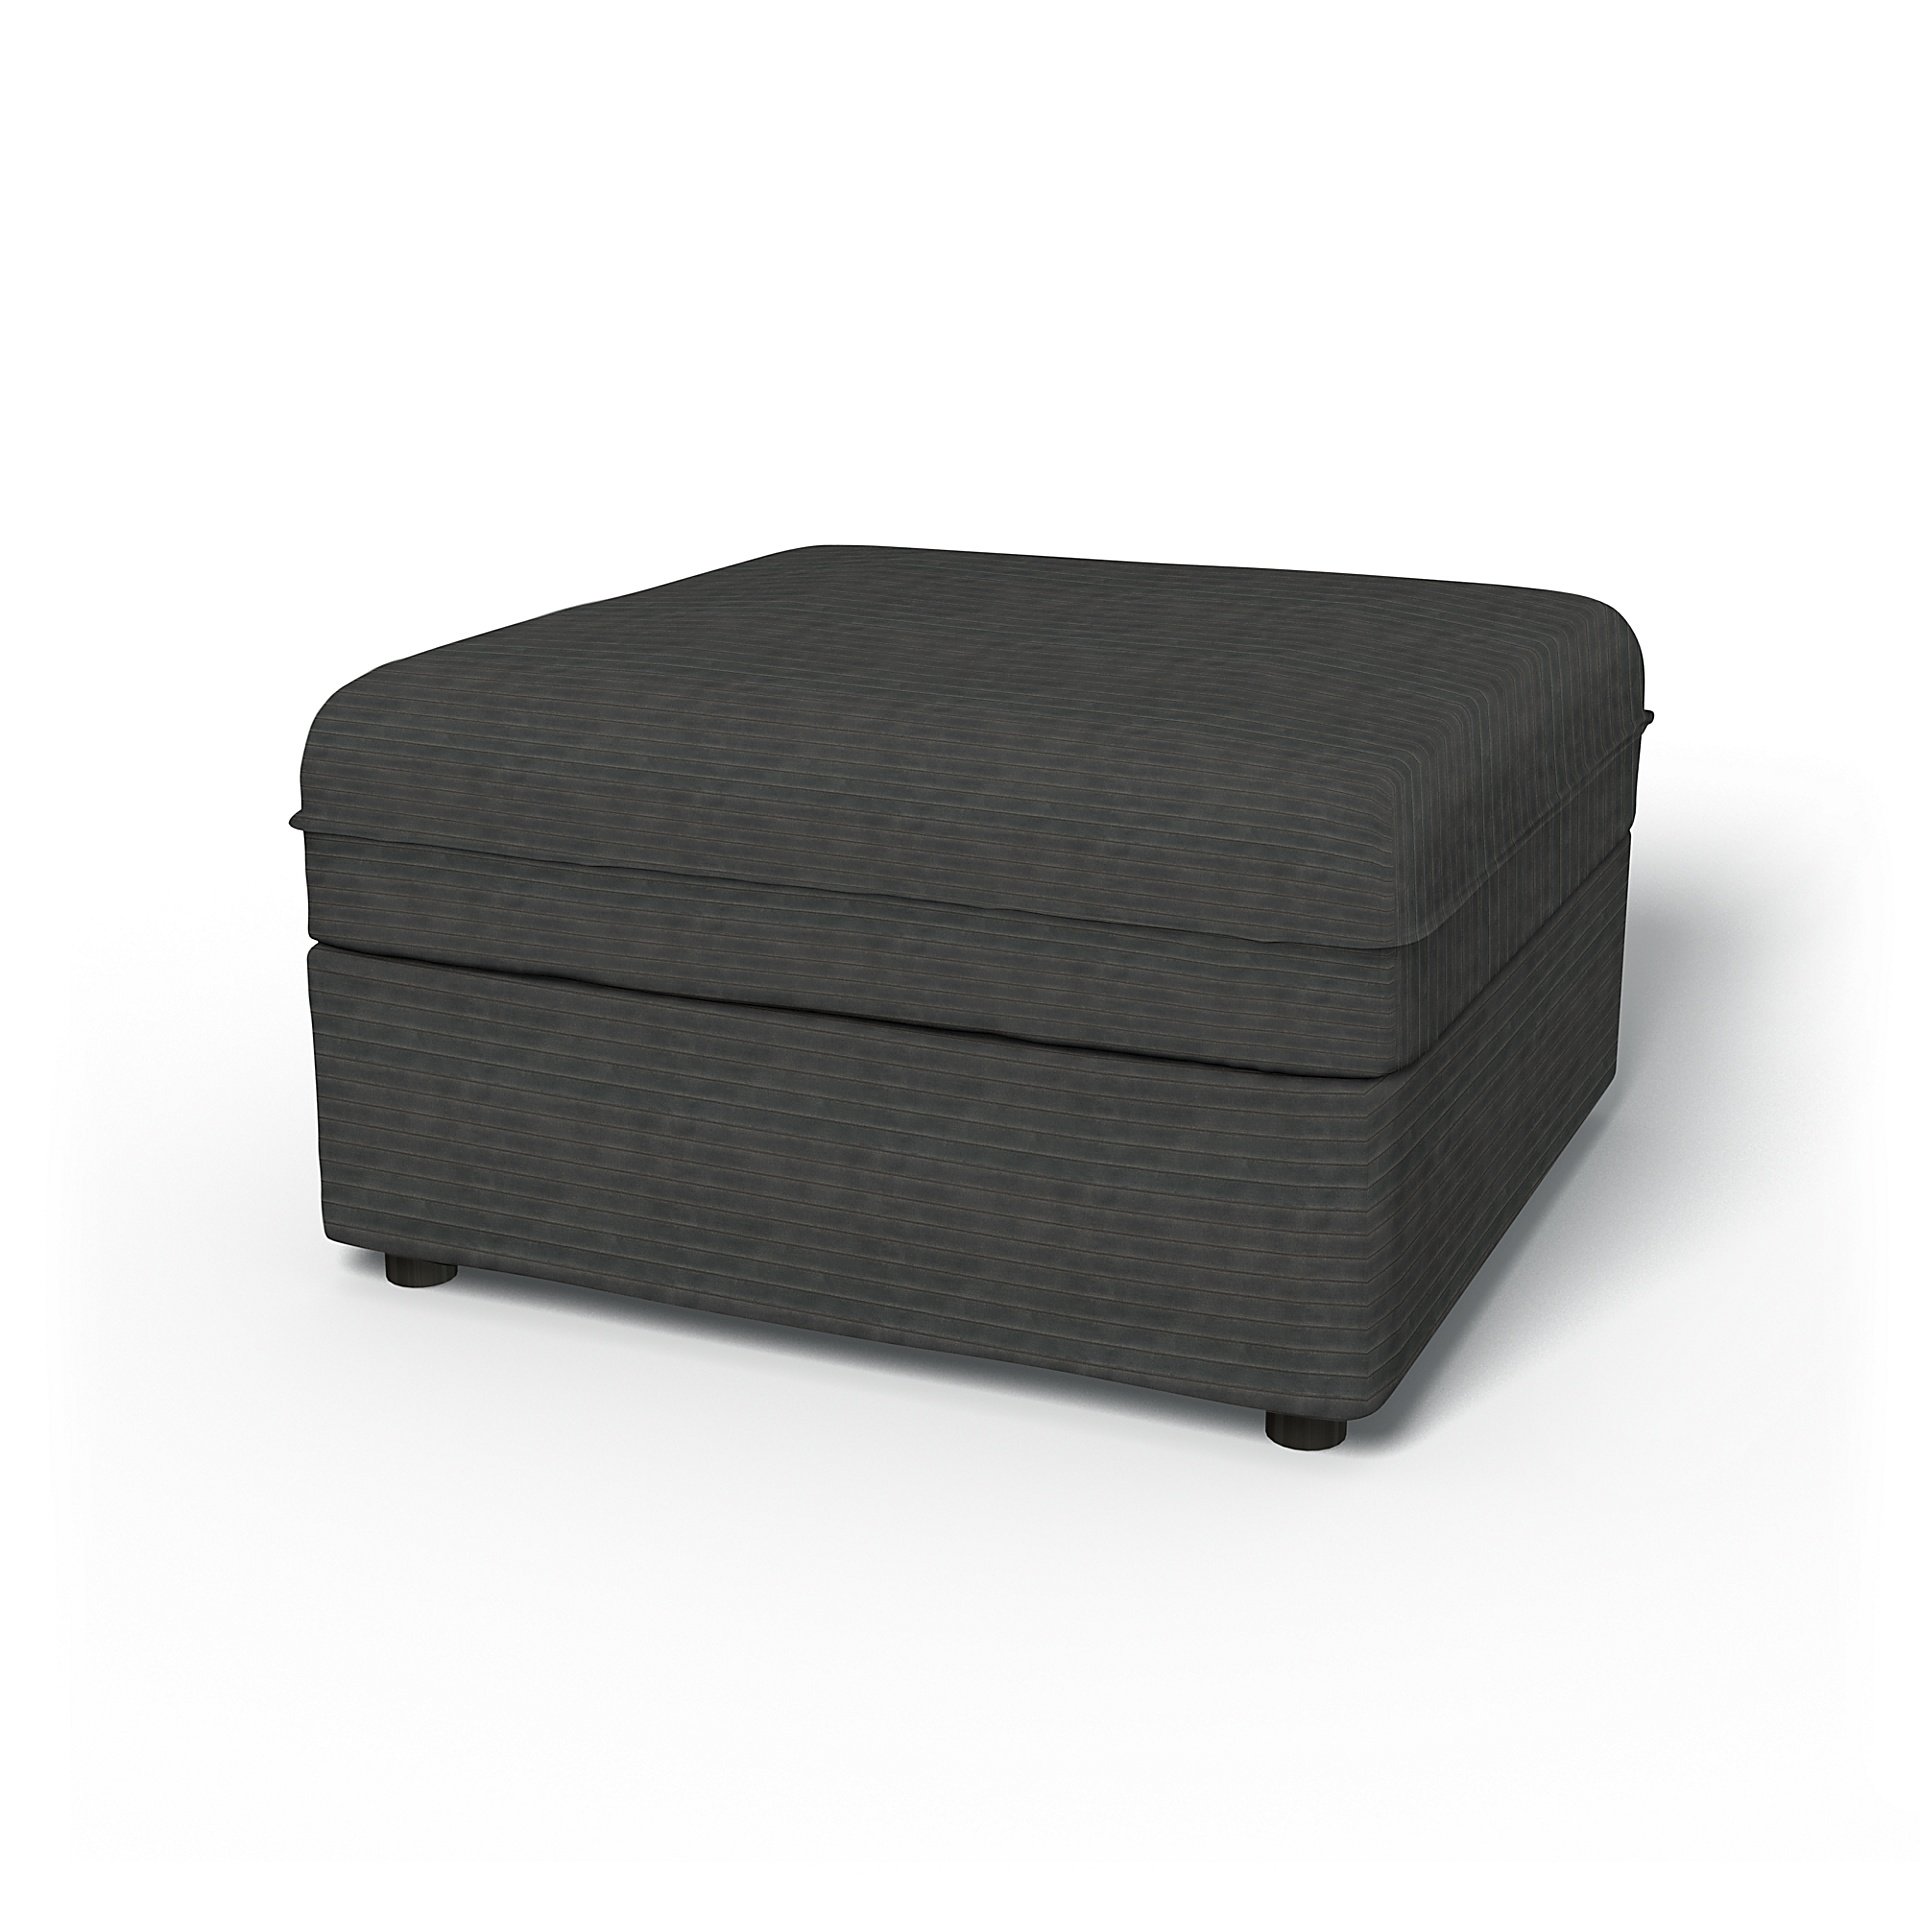 IKEA - Vallentuna Seat Module with Storage Cover 80x80cm 32x32in, Licorice, Corduroy - Bemz